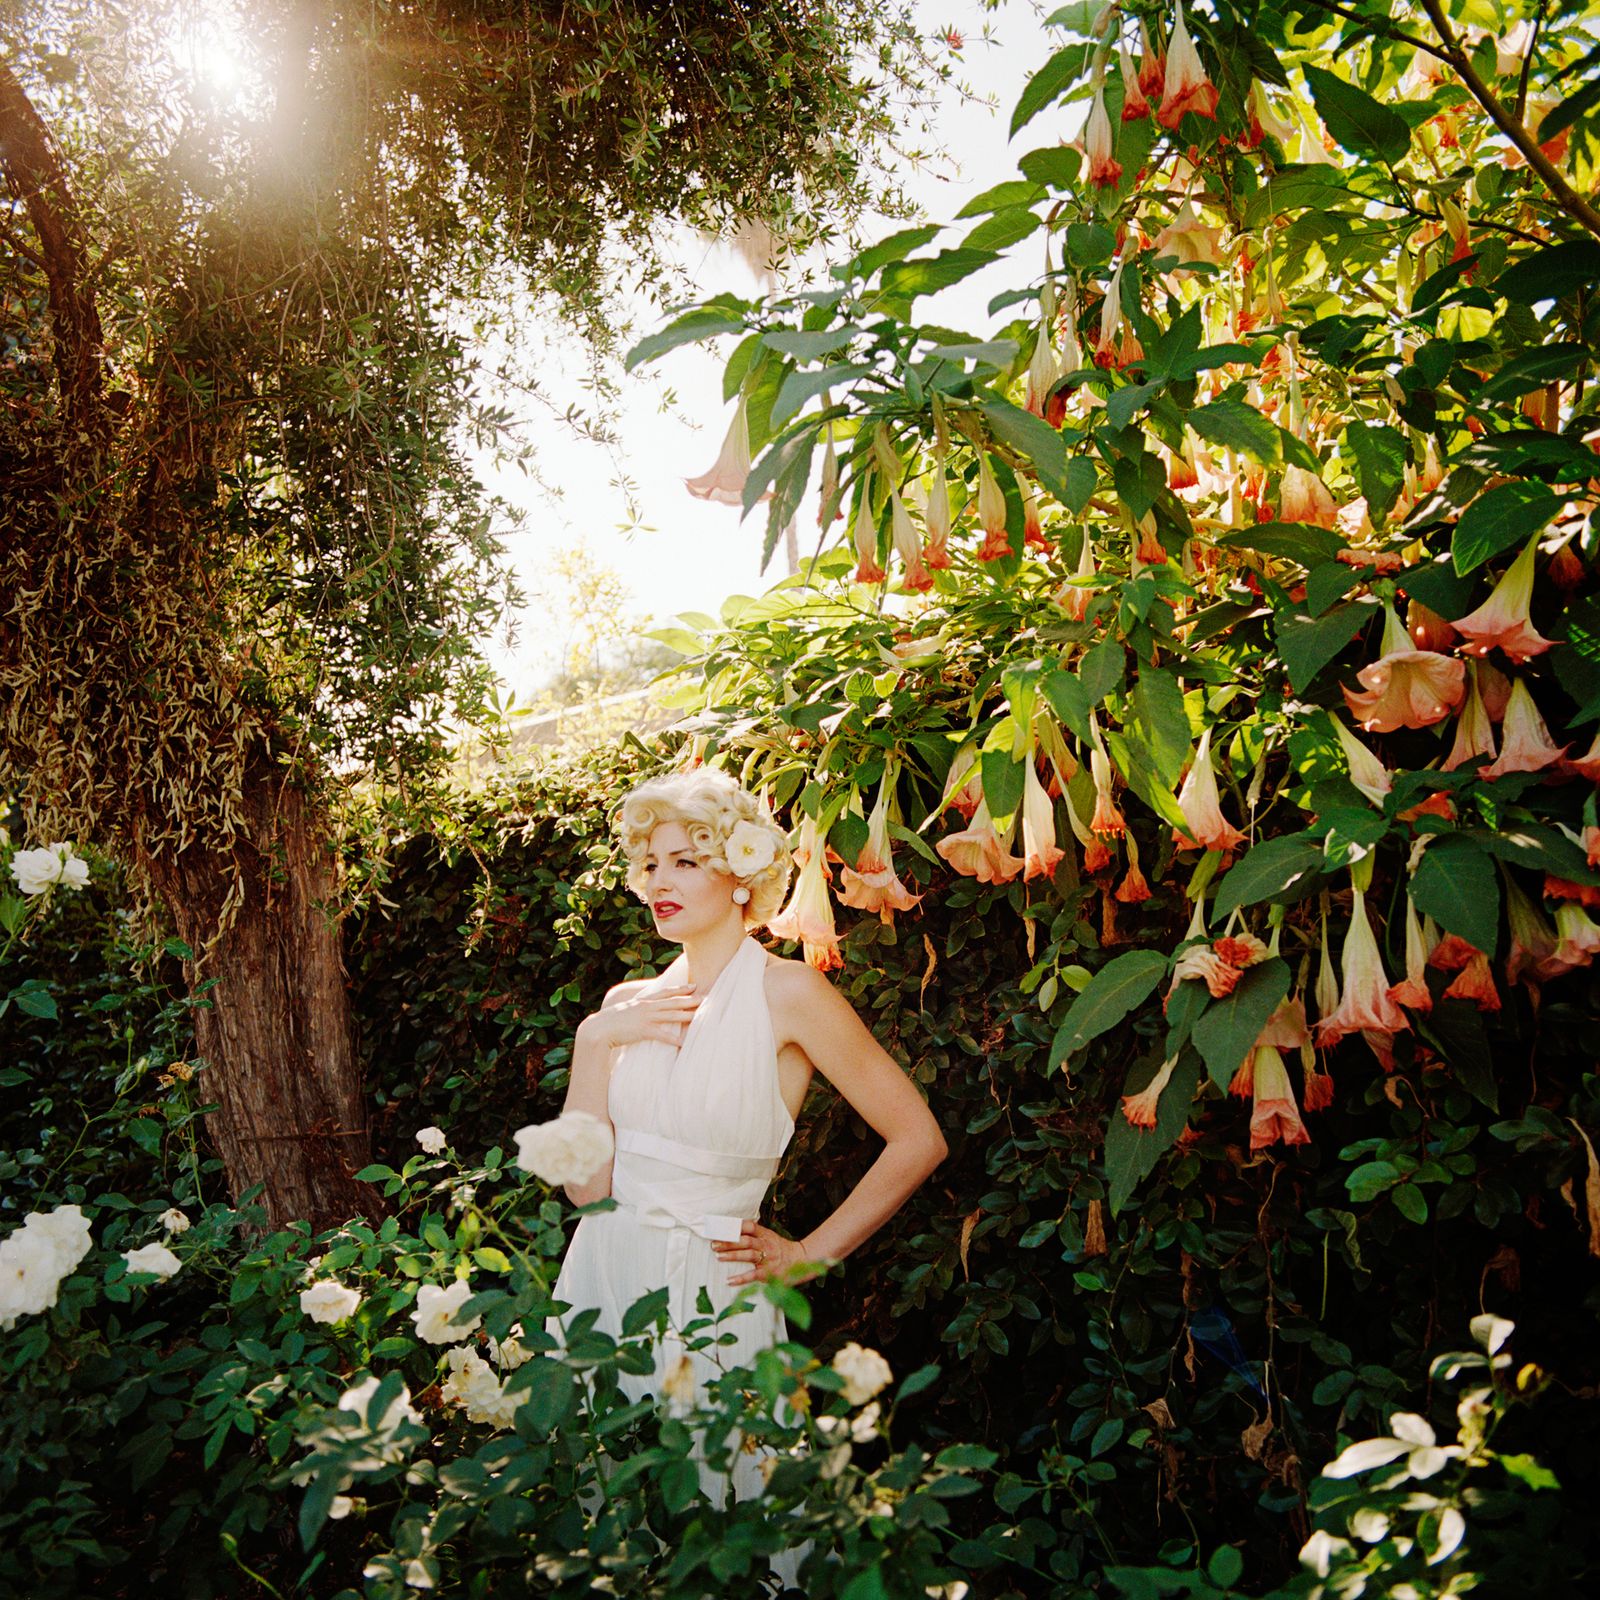 © Emily Berl - Ashley as Marilyn Monroe, Covina, CA, 2013.